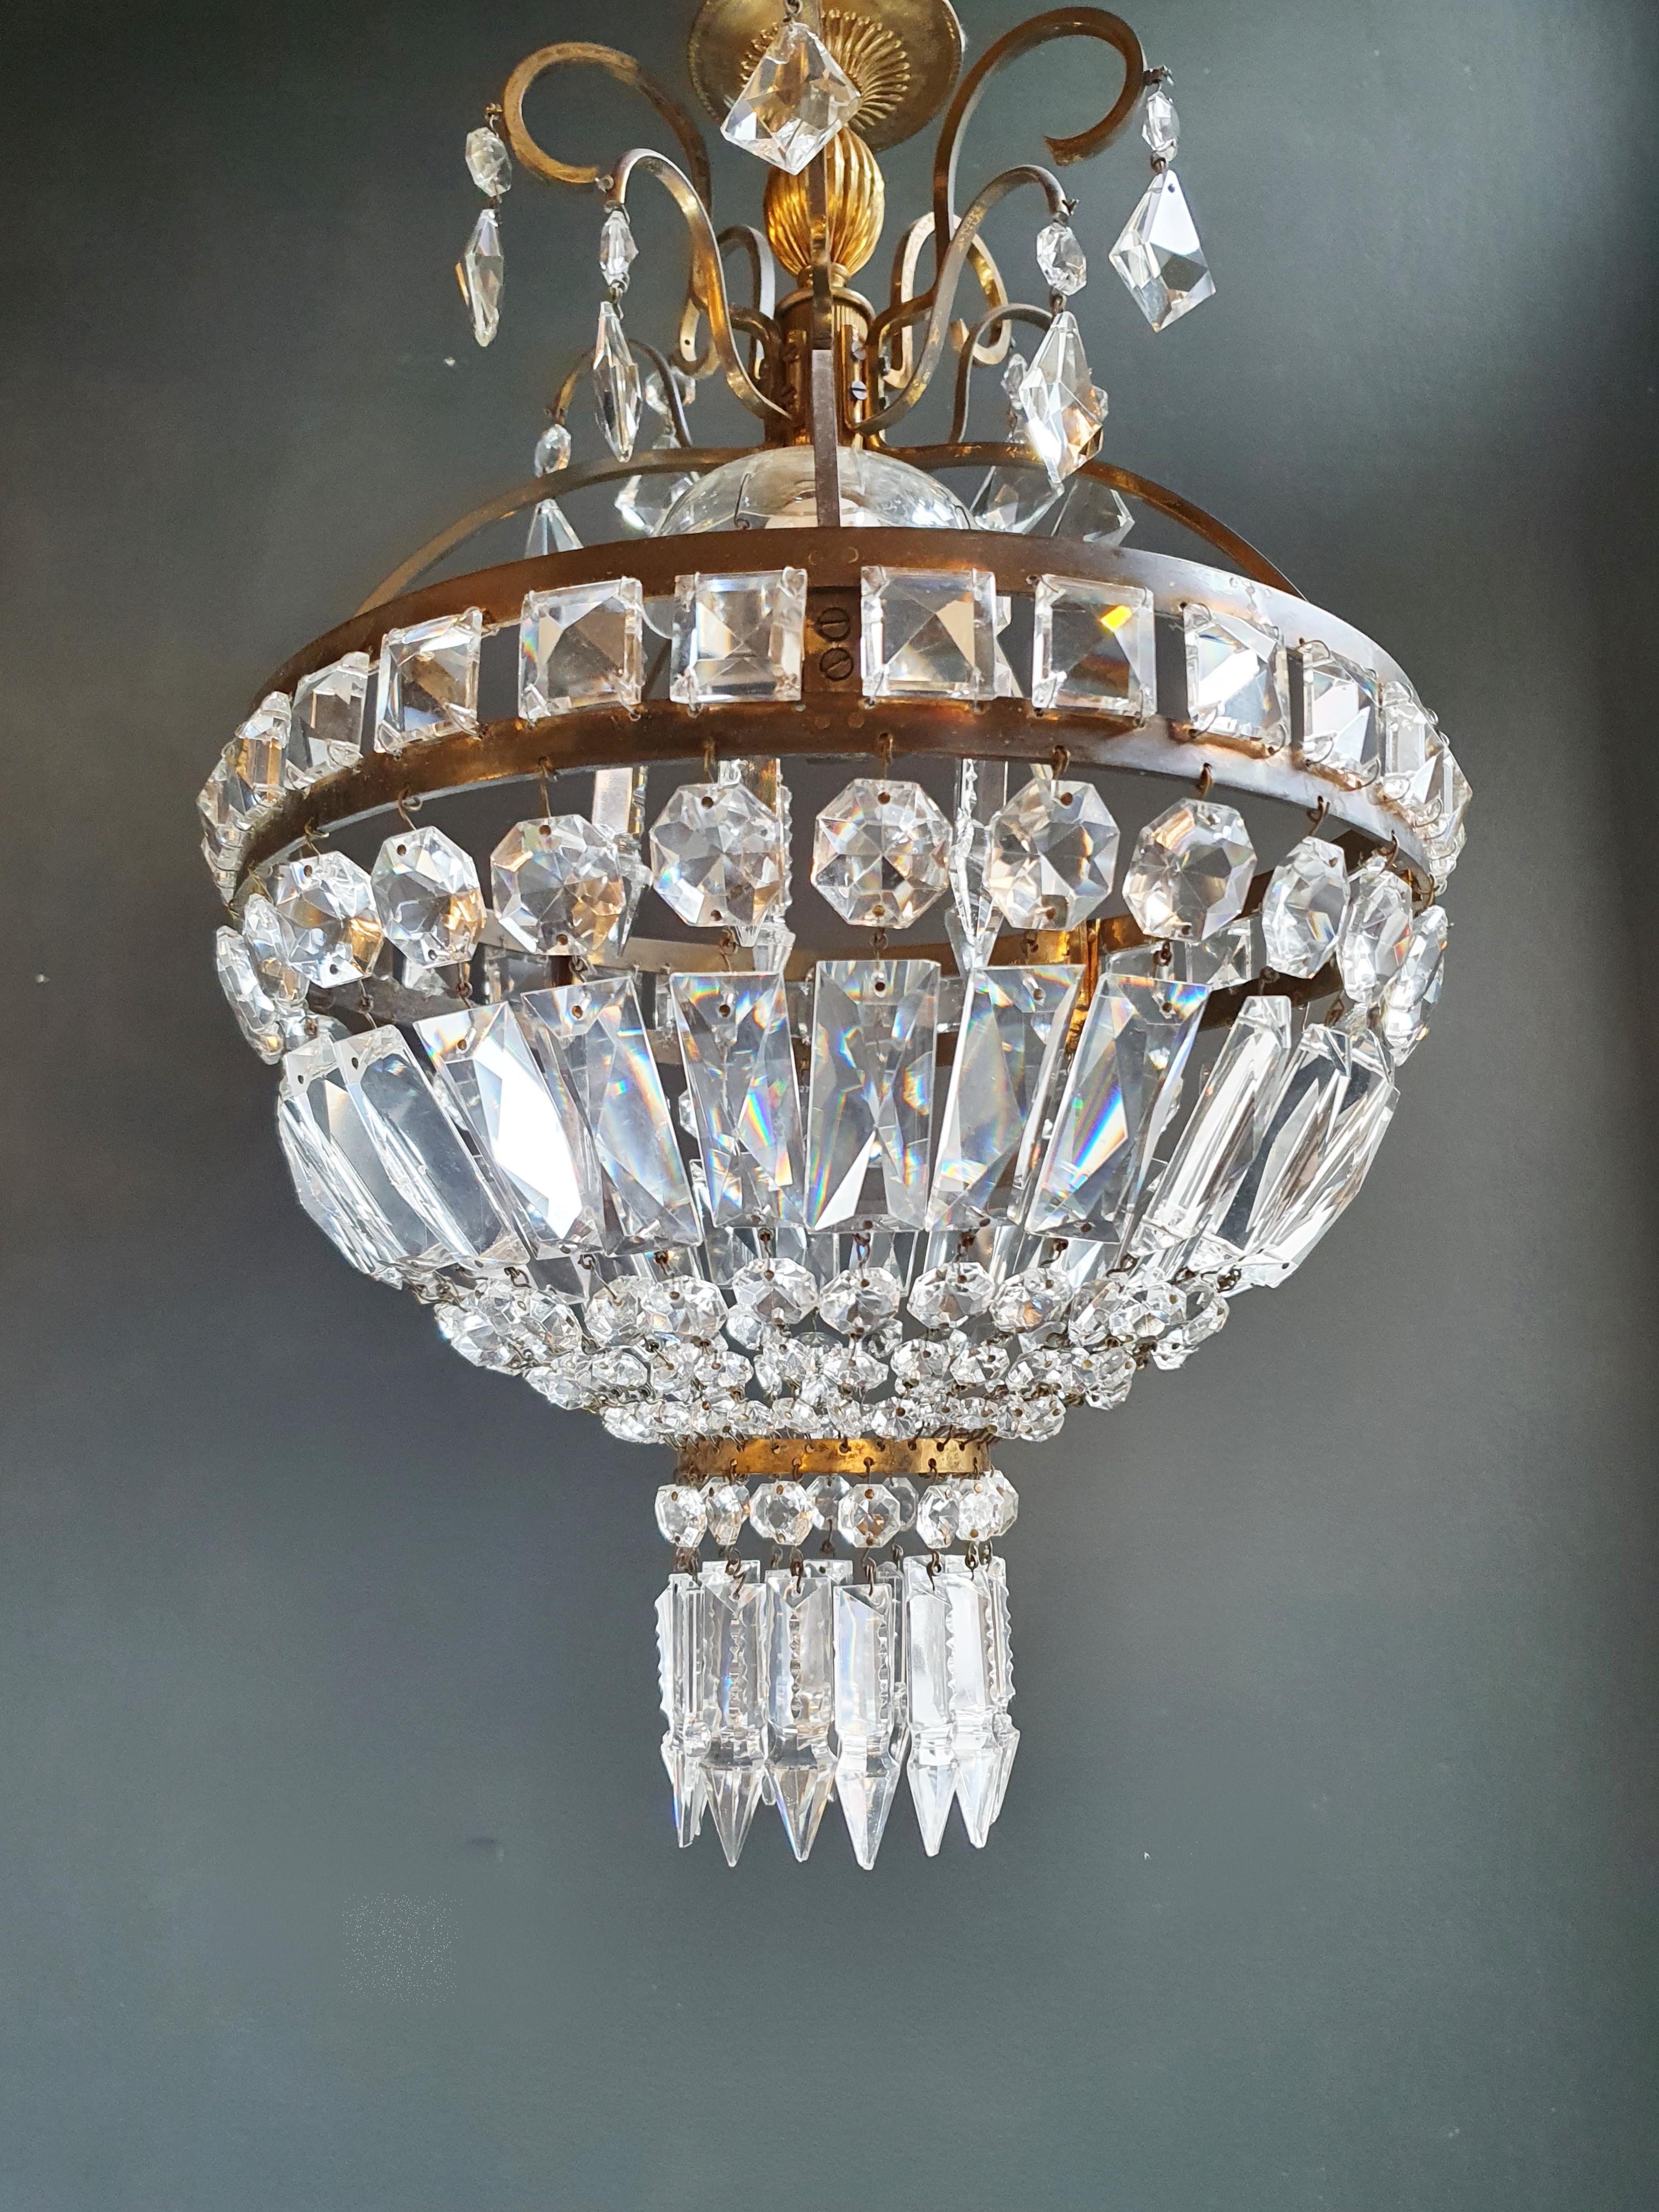 Art Nouveau Basket Chandelier Brass Empire Crystal Ceiling Antique small Bronze